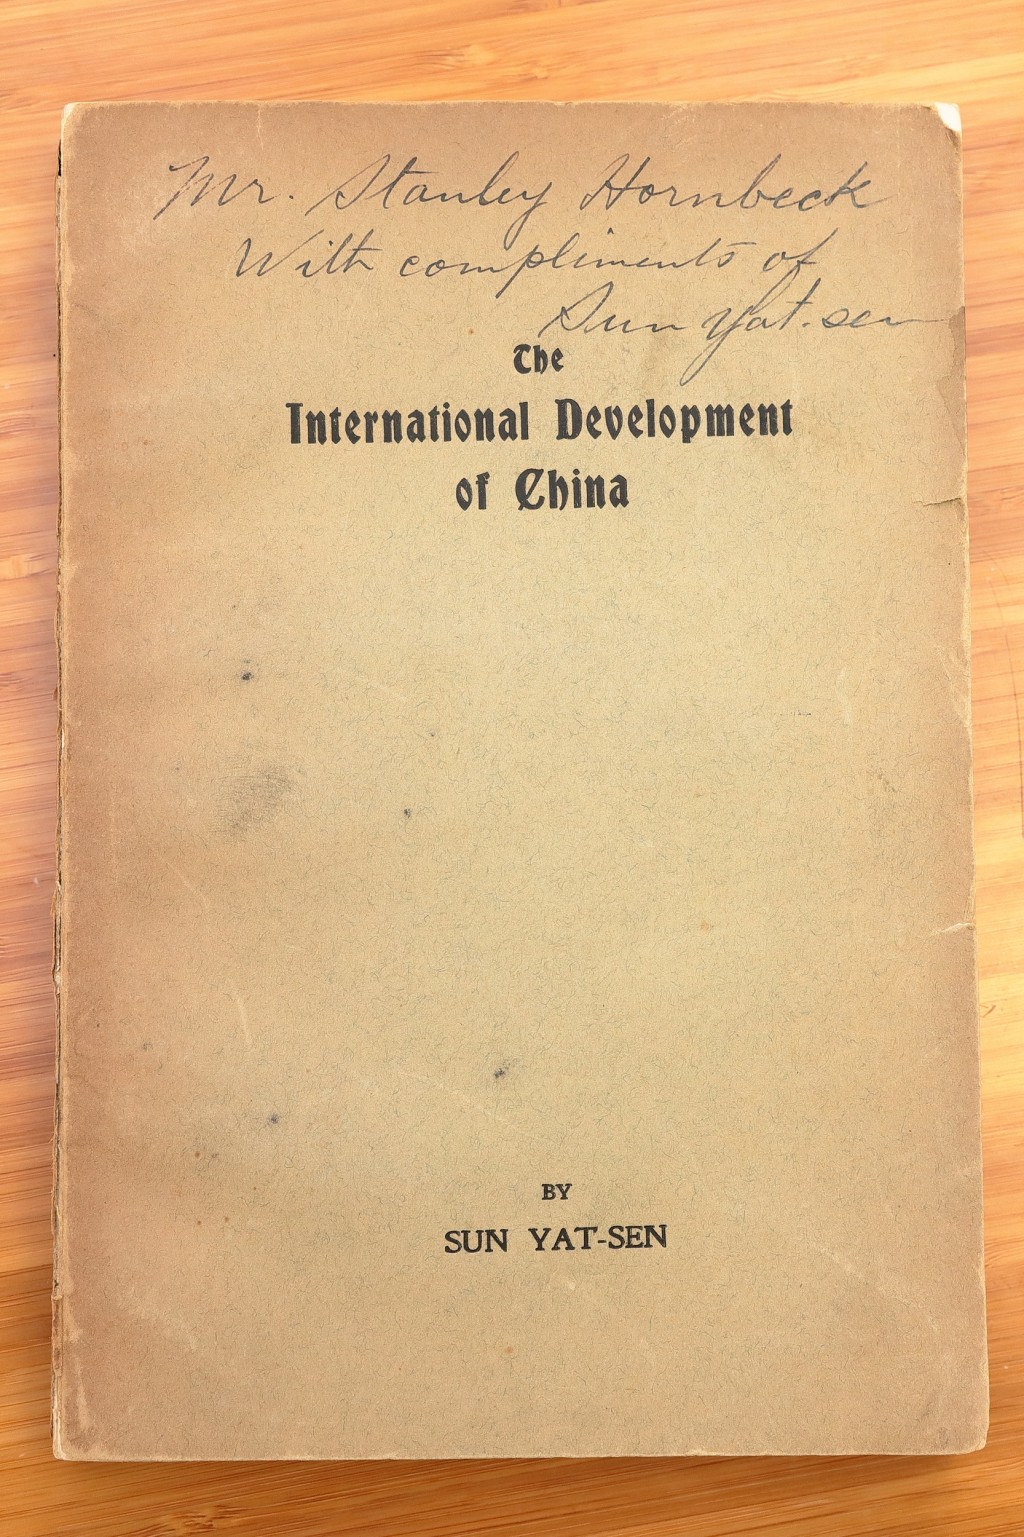 孫中山親筆簽名的著作《The international development of China》恒大提供圖片